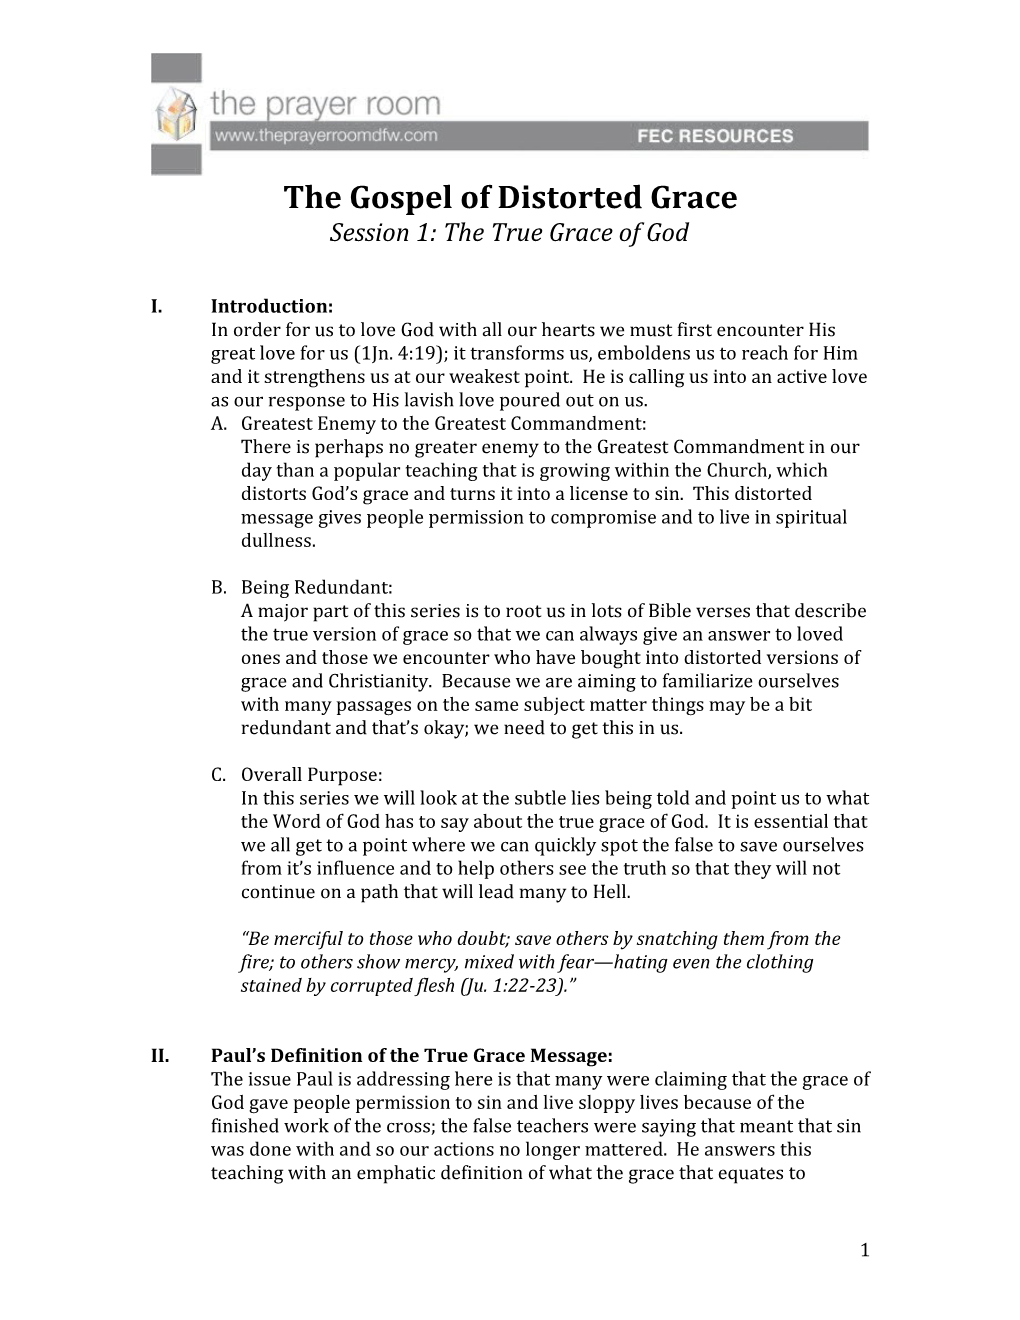 The Gospel of Distorted Grace